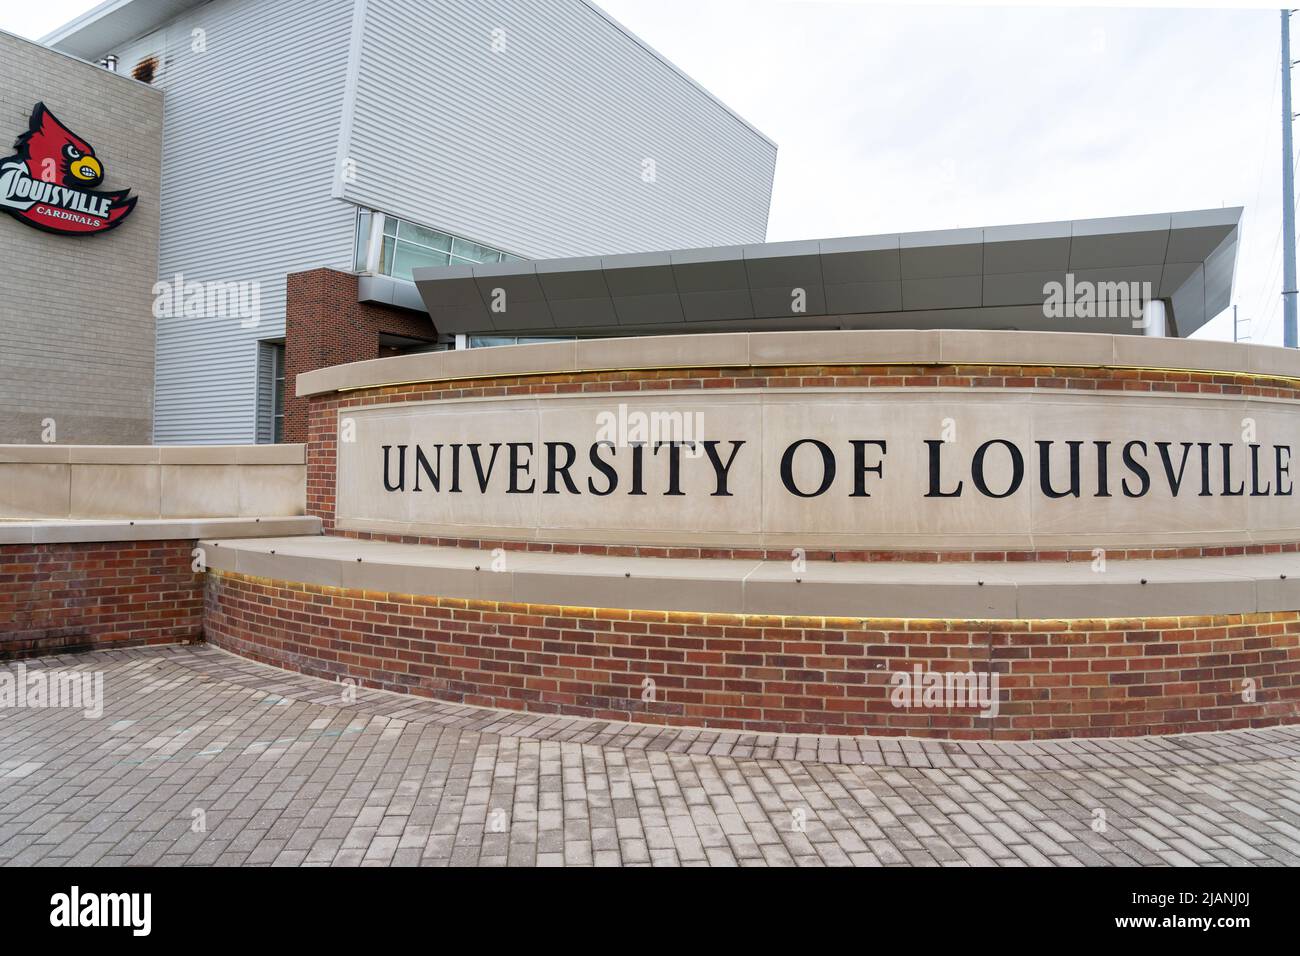 Louisville, KY, USA - December 28, 2021: The University of Louisville sign is shown in Louisville, Kentucky, USA. Stock Photo